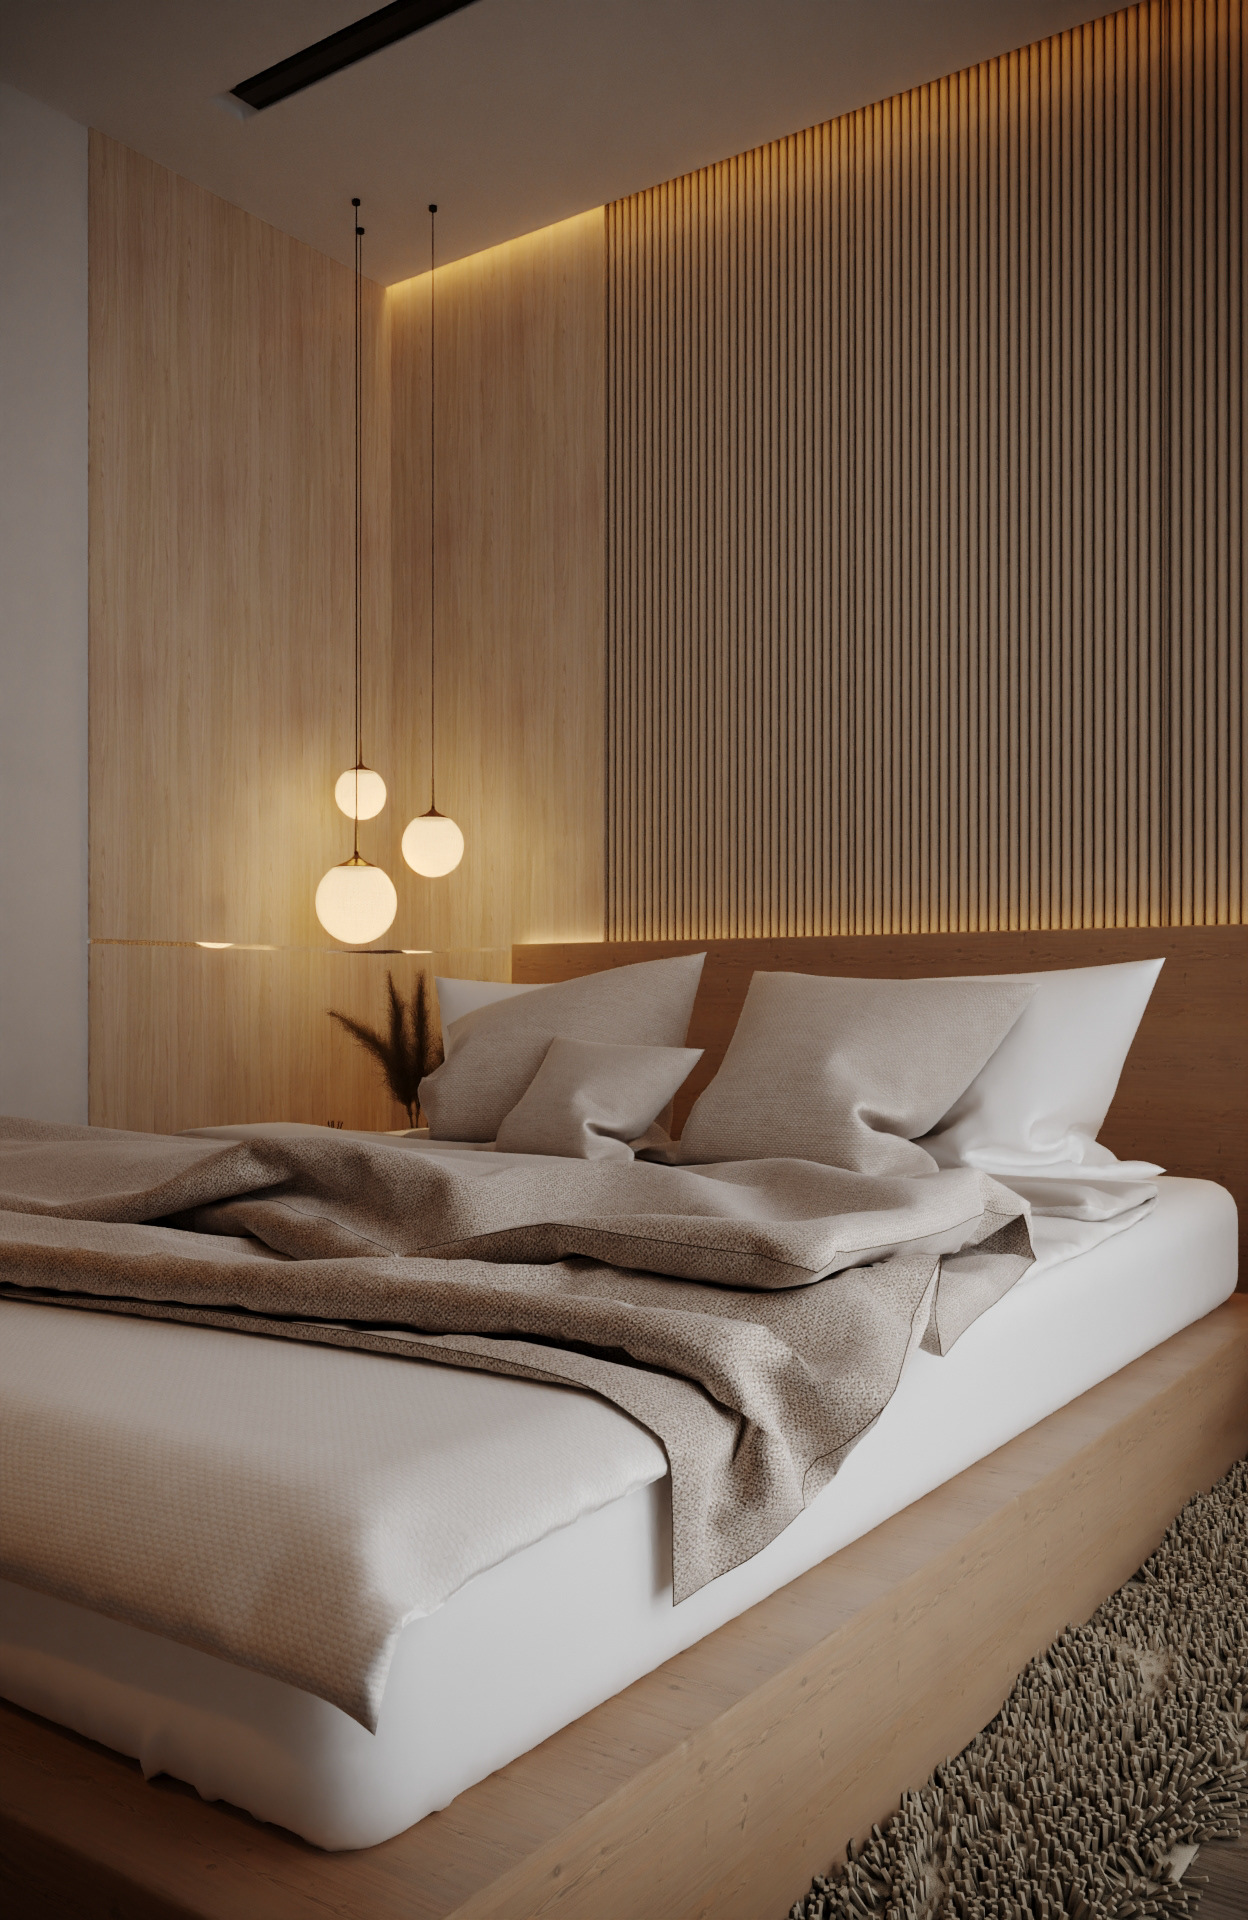 Elegant Japanese Bedroom Set for a
Tranquil Retreat